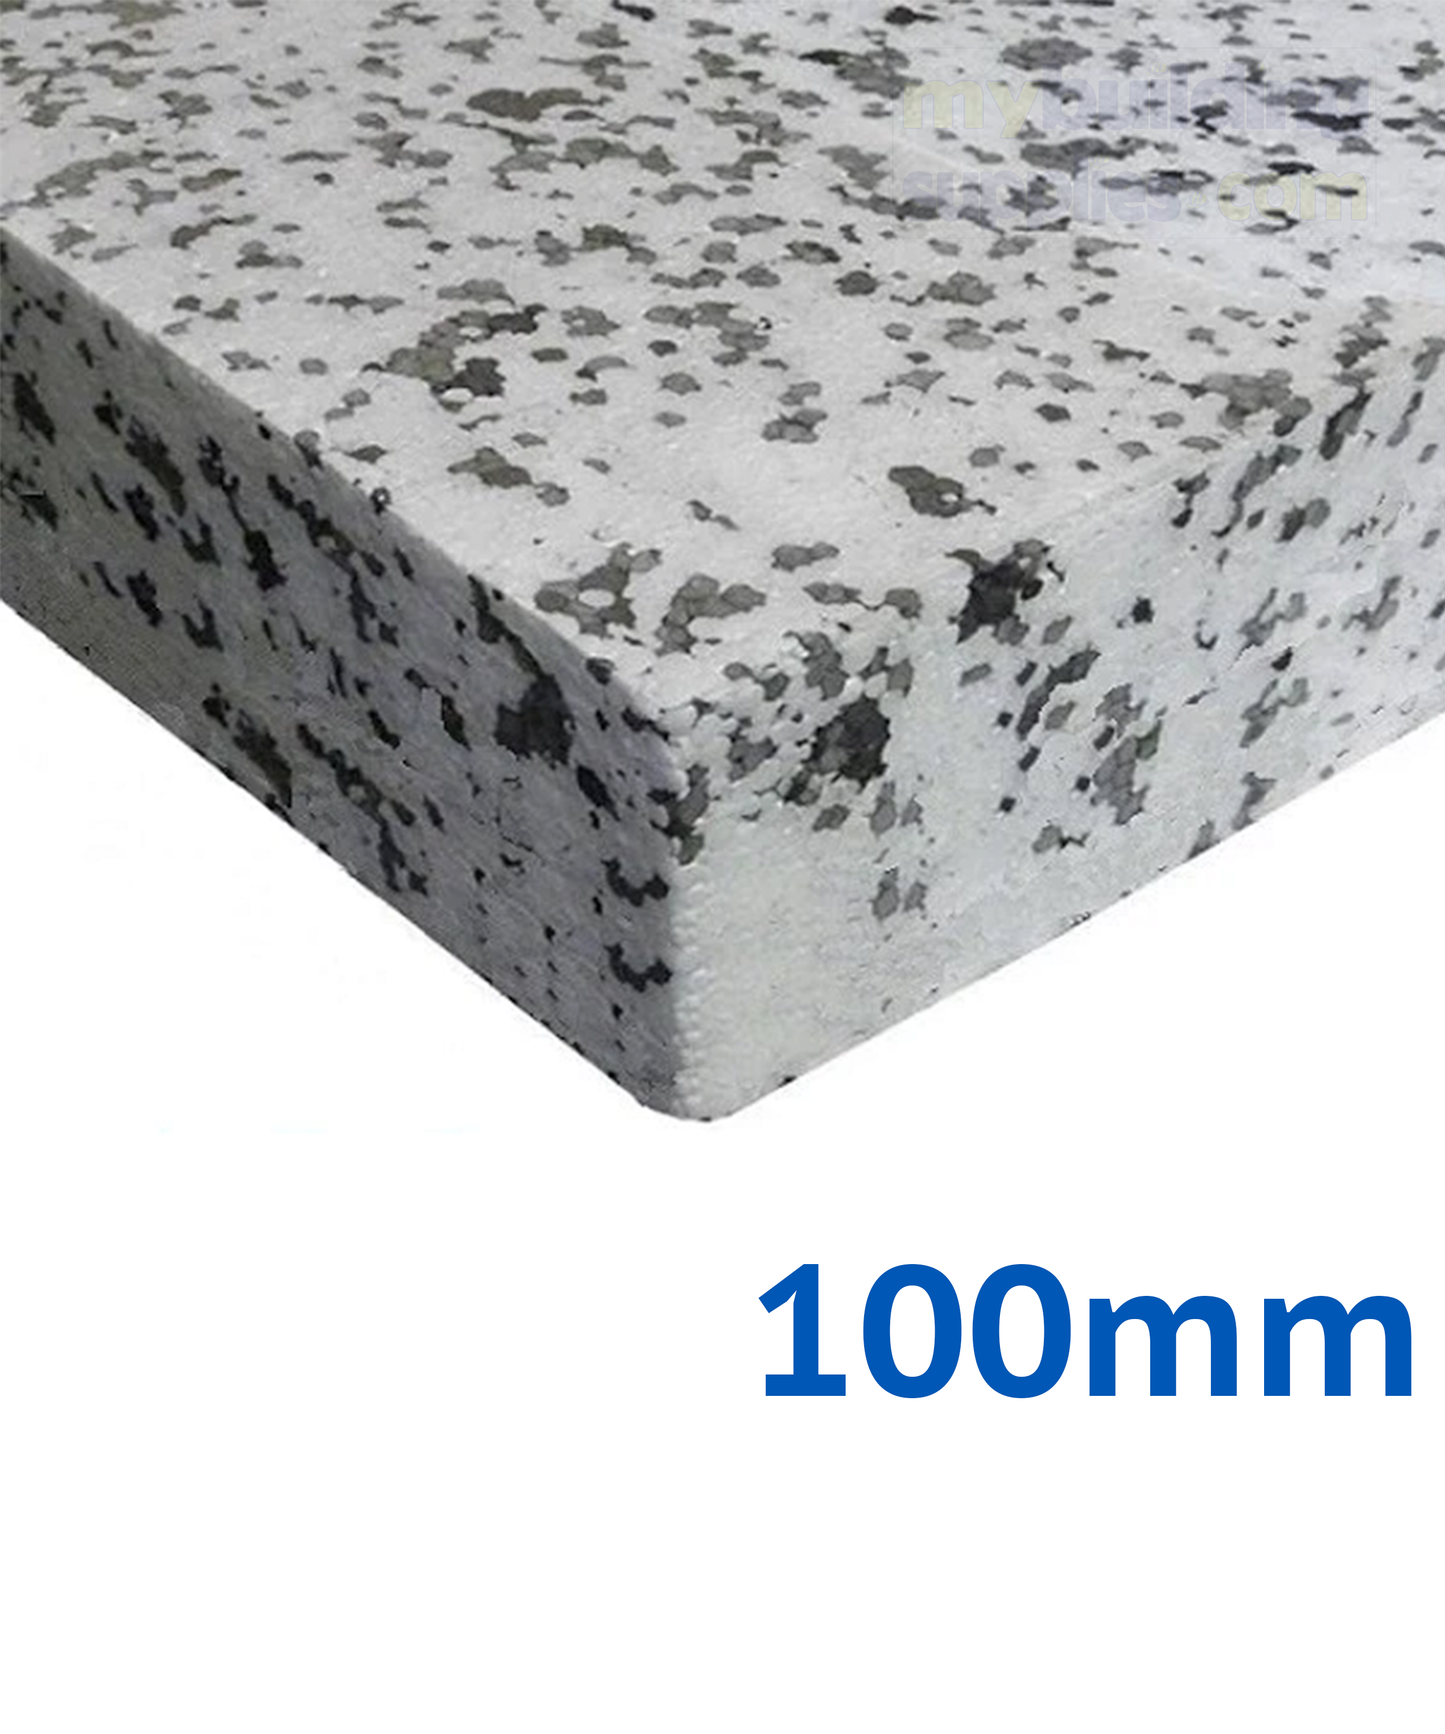 Jablite Expanded Polystyrene (EPS 70) 1200mm x 2400mm